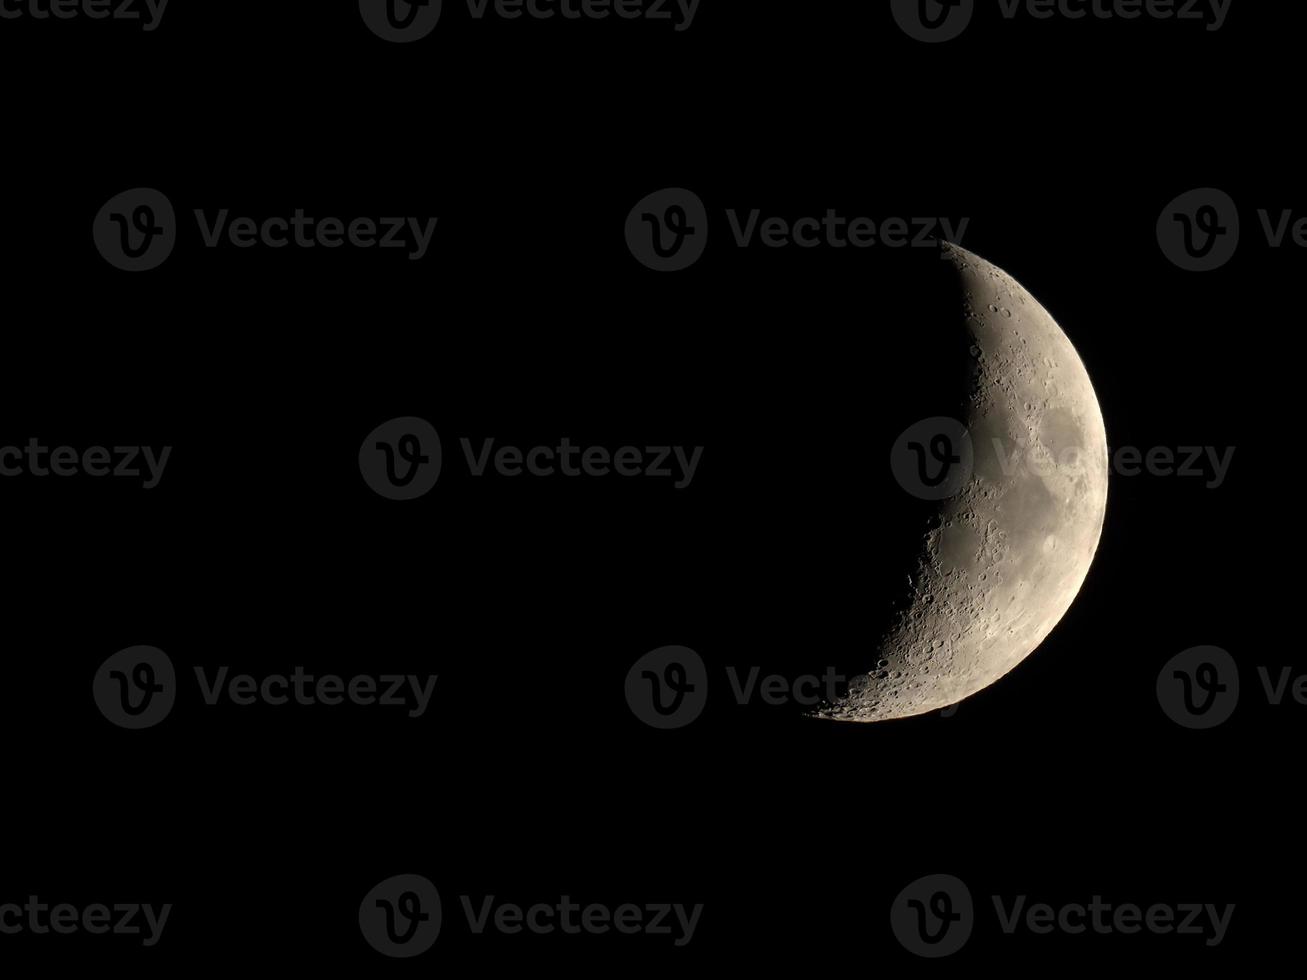 vaxande halvmåne sett med teleskop foto